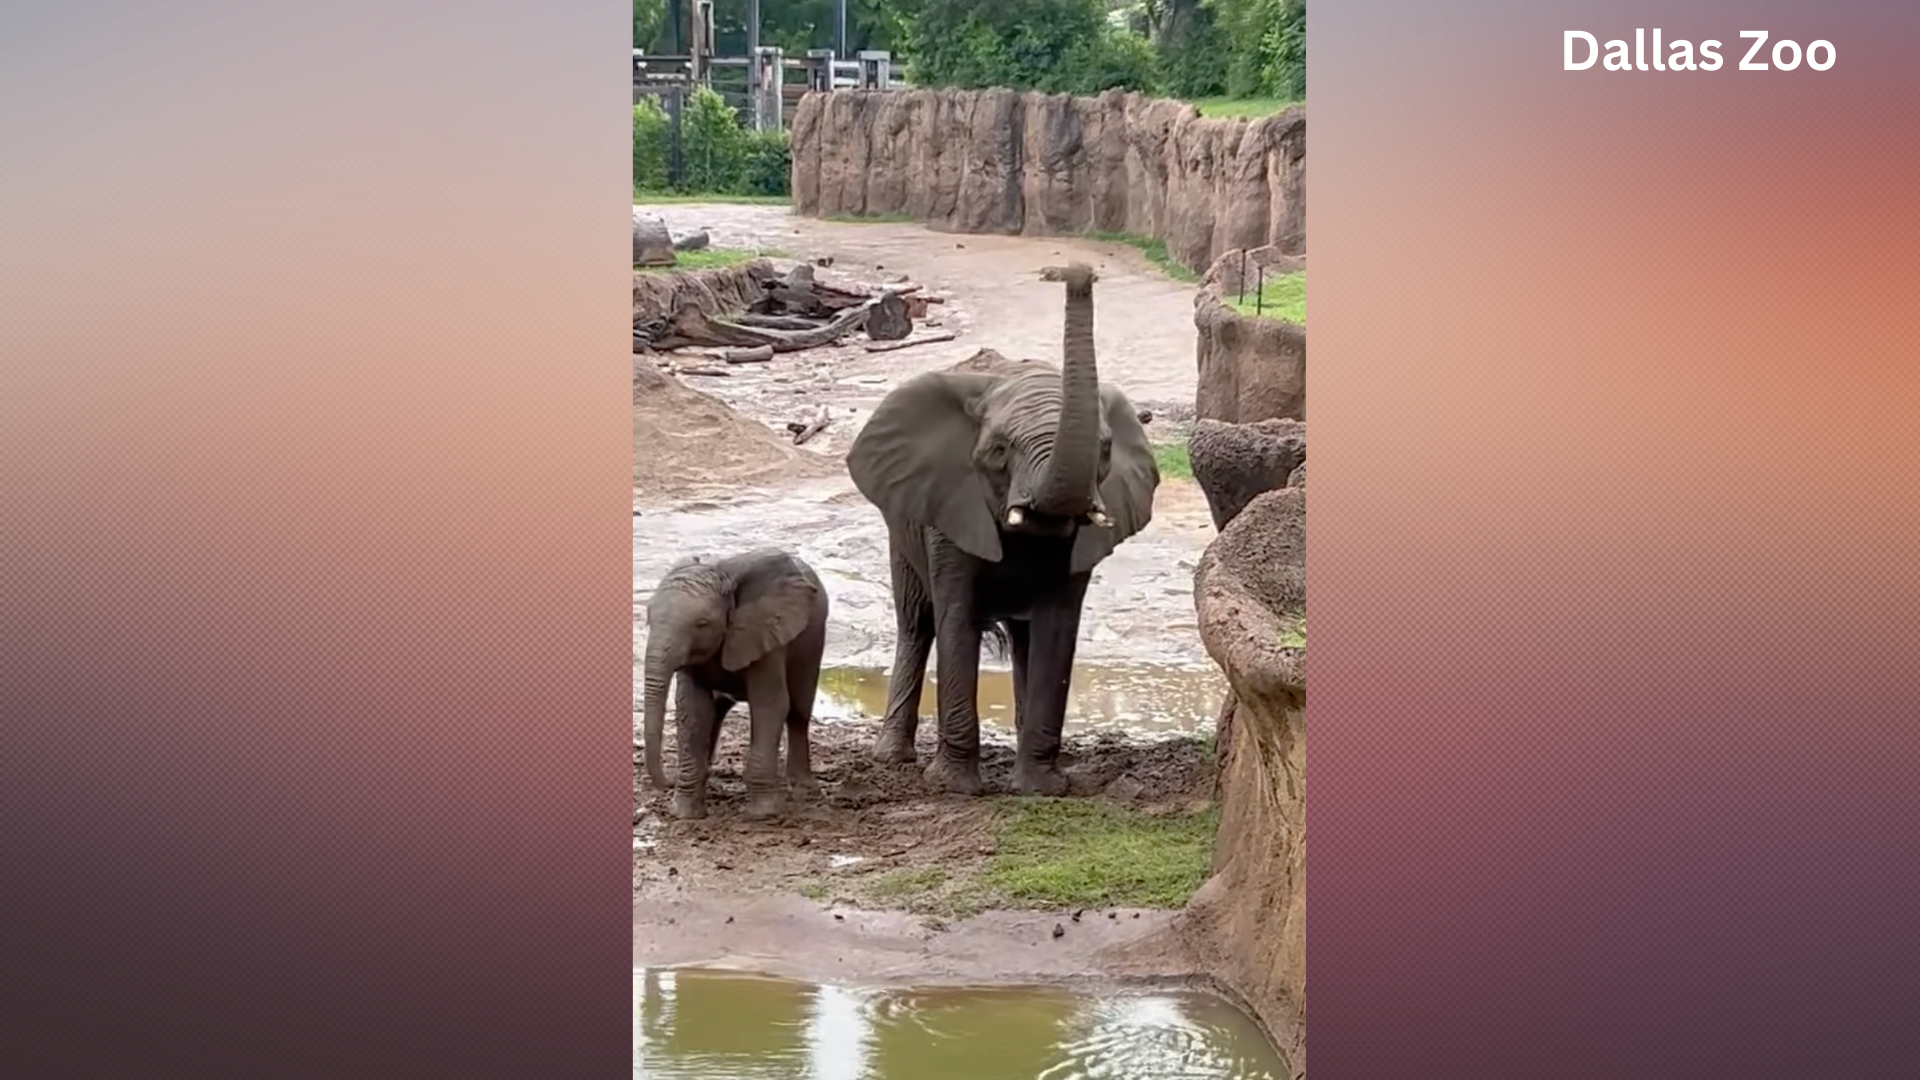 Elephants play in the rain at Dallas Zoo